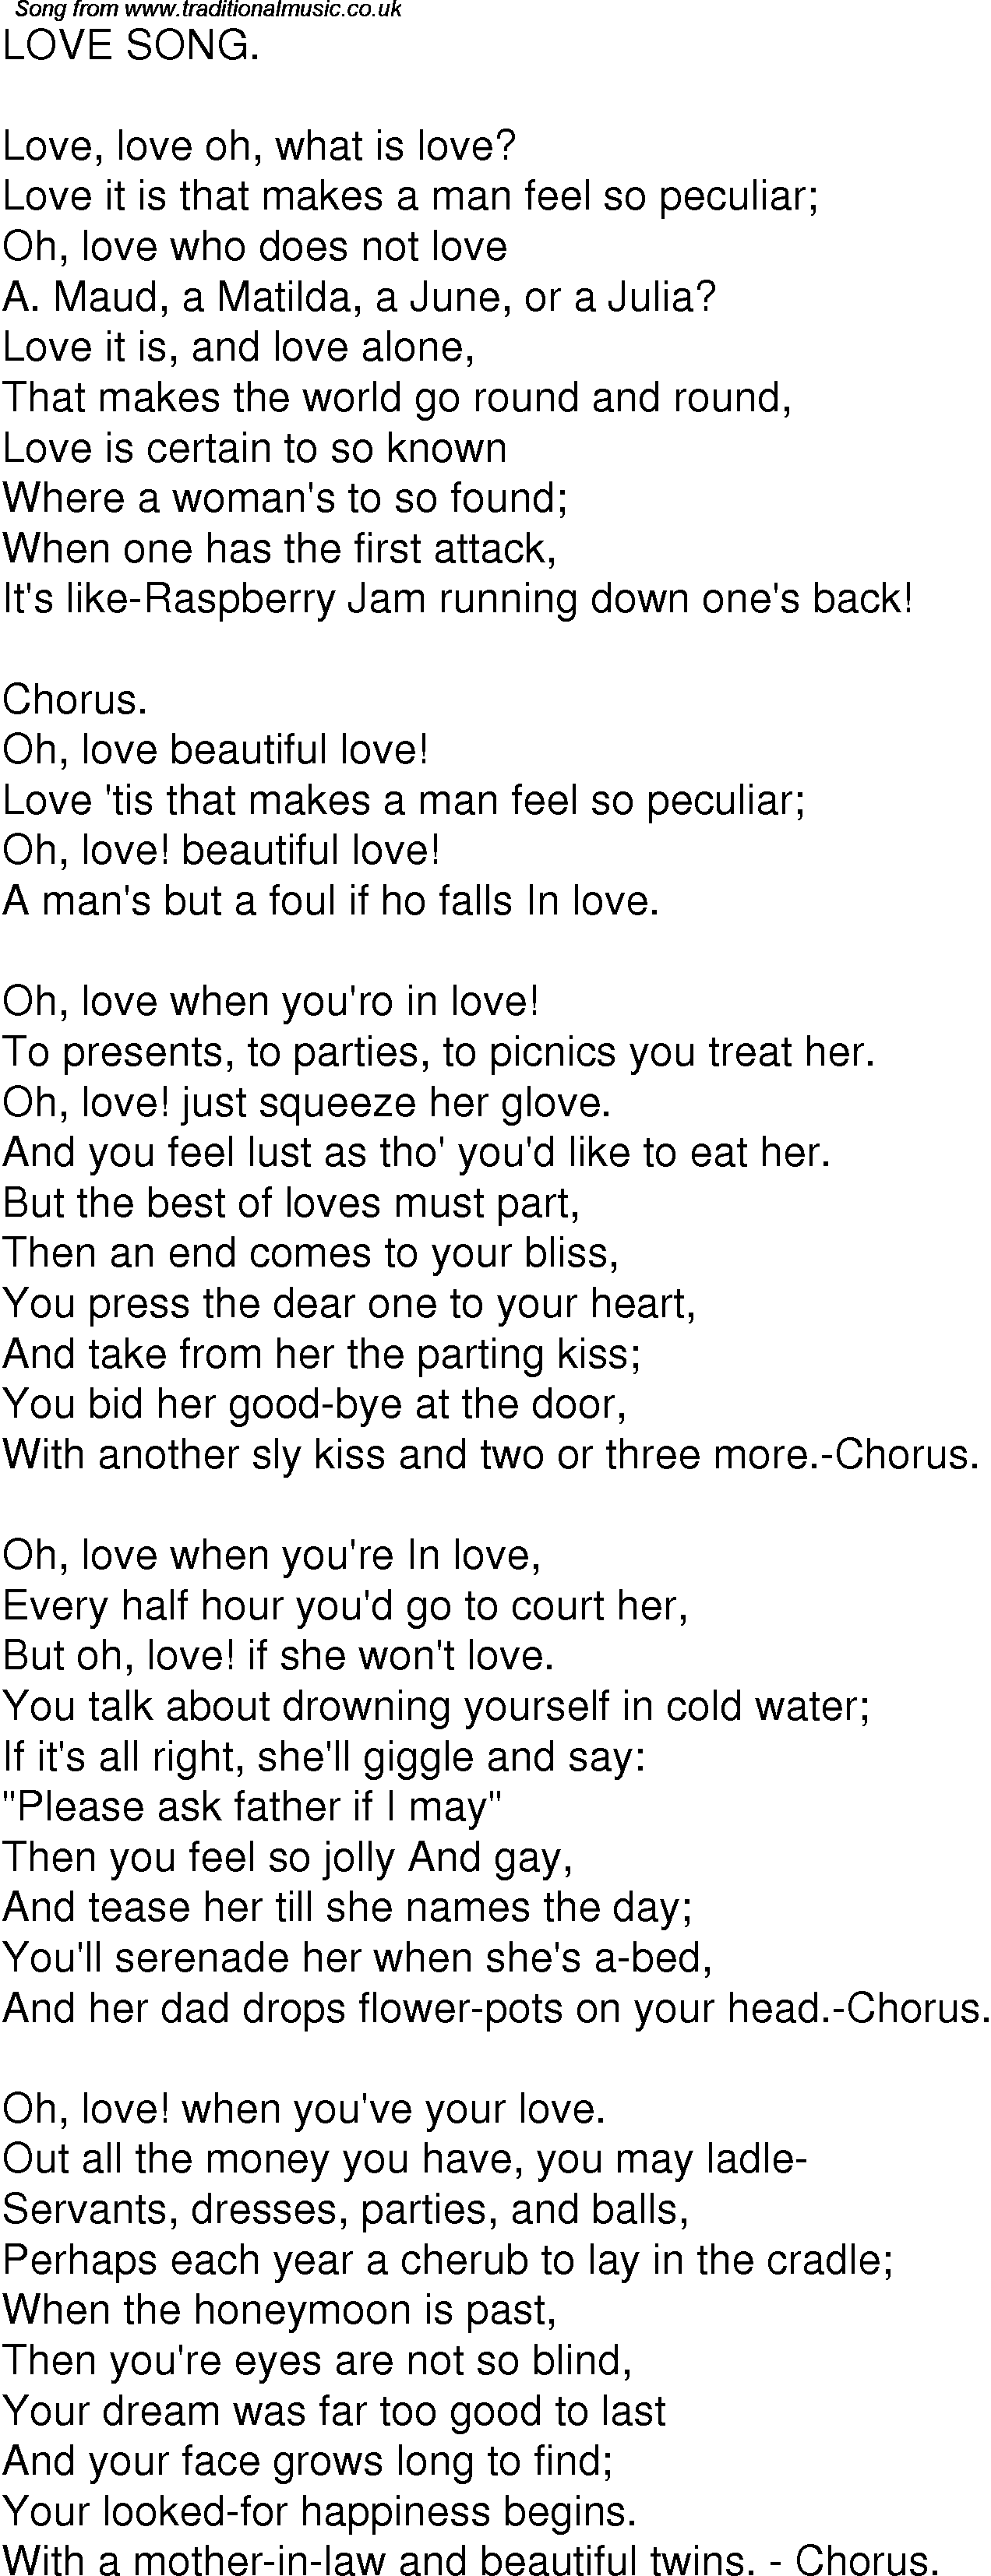 a love song